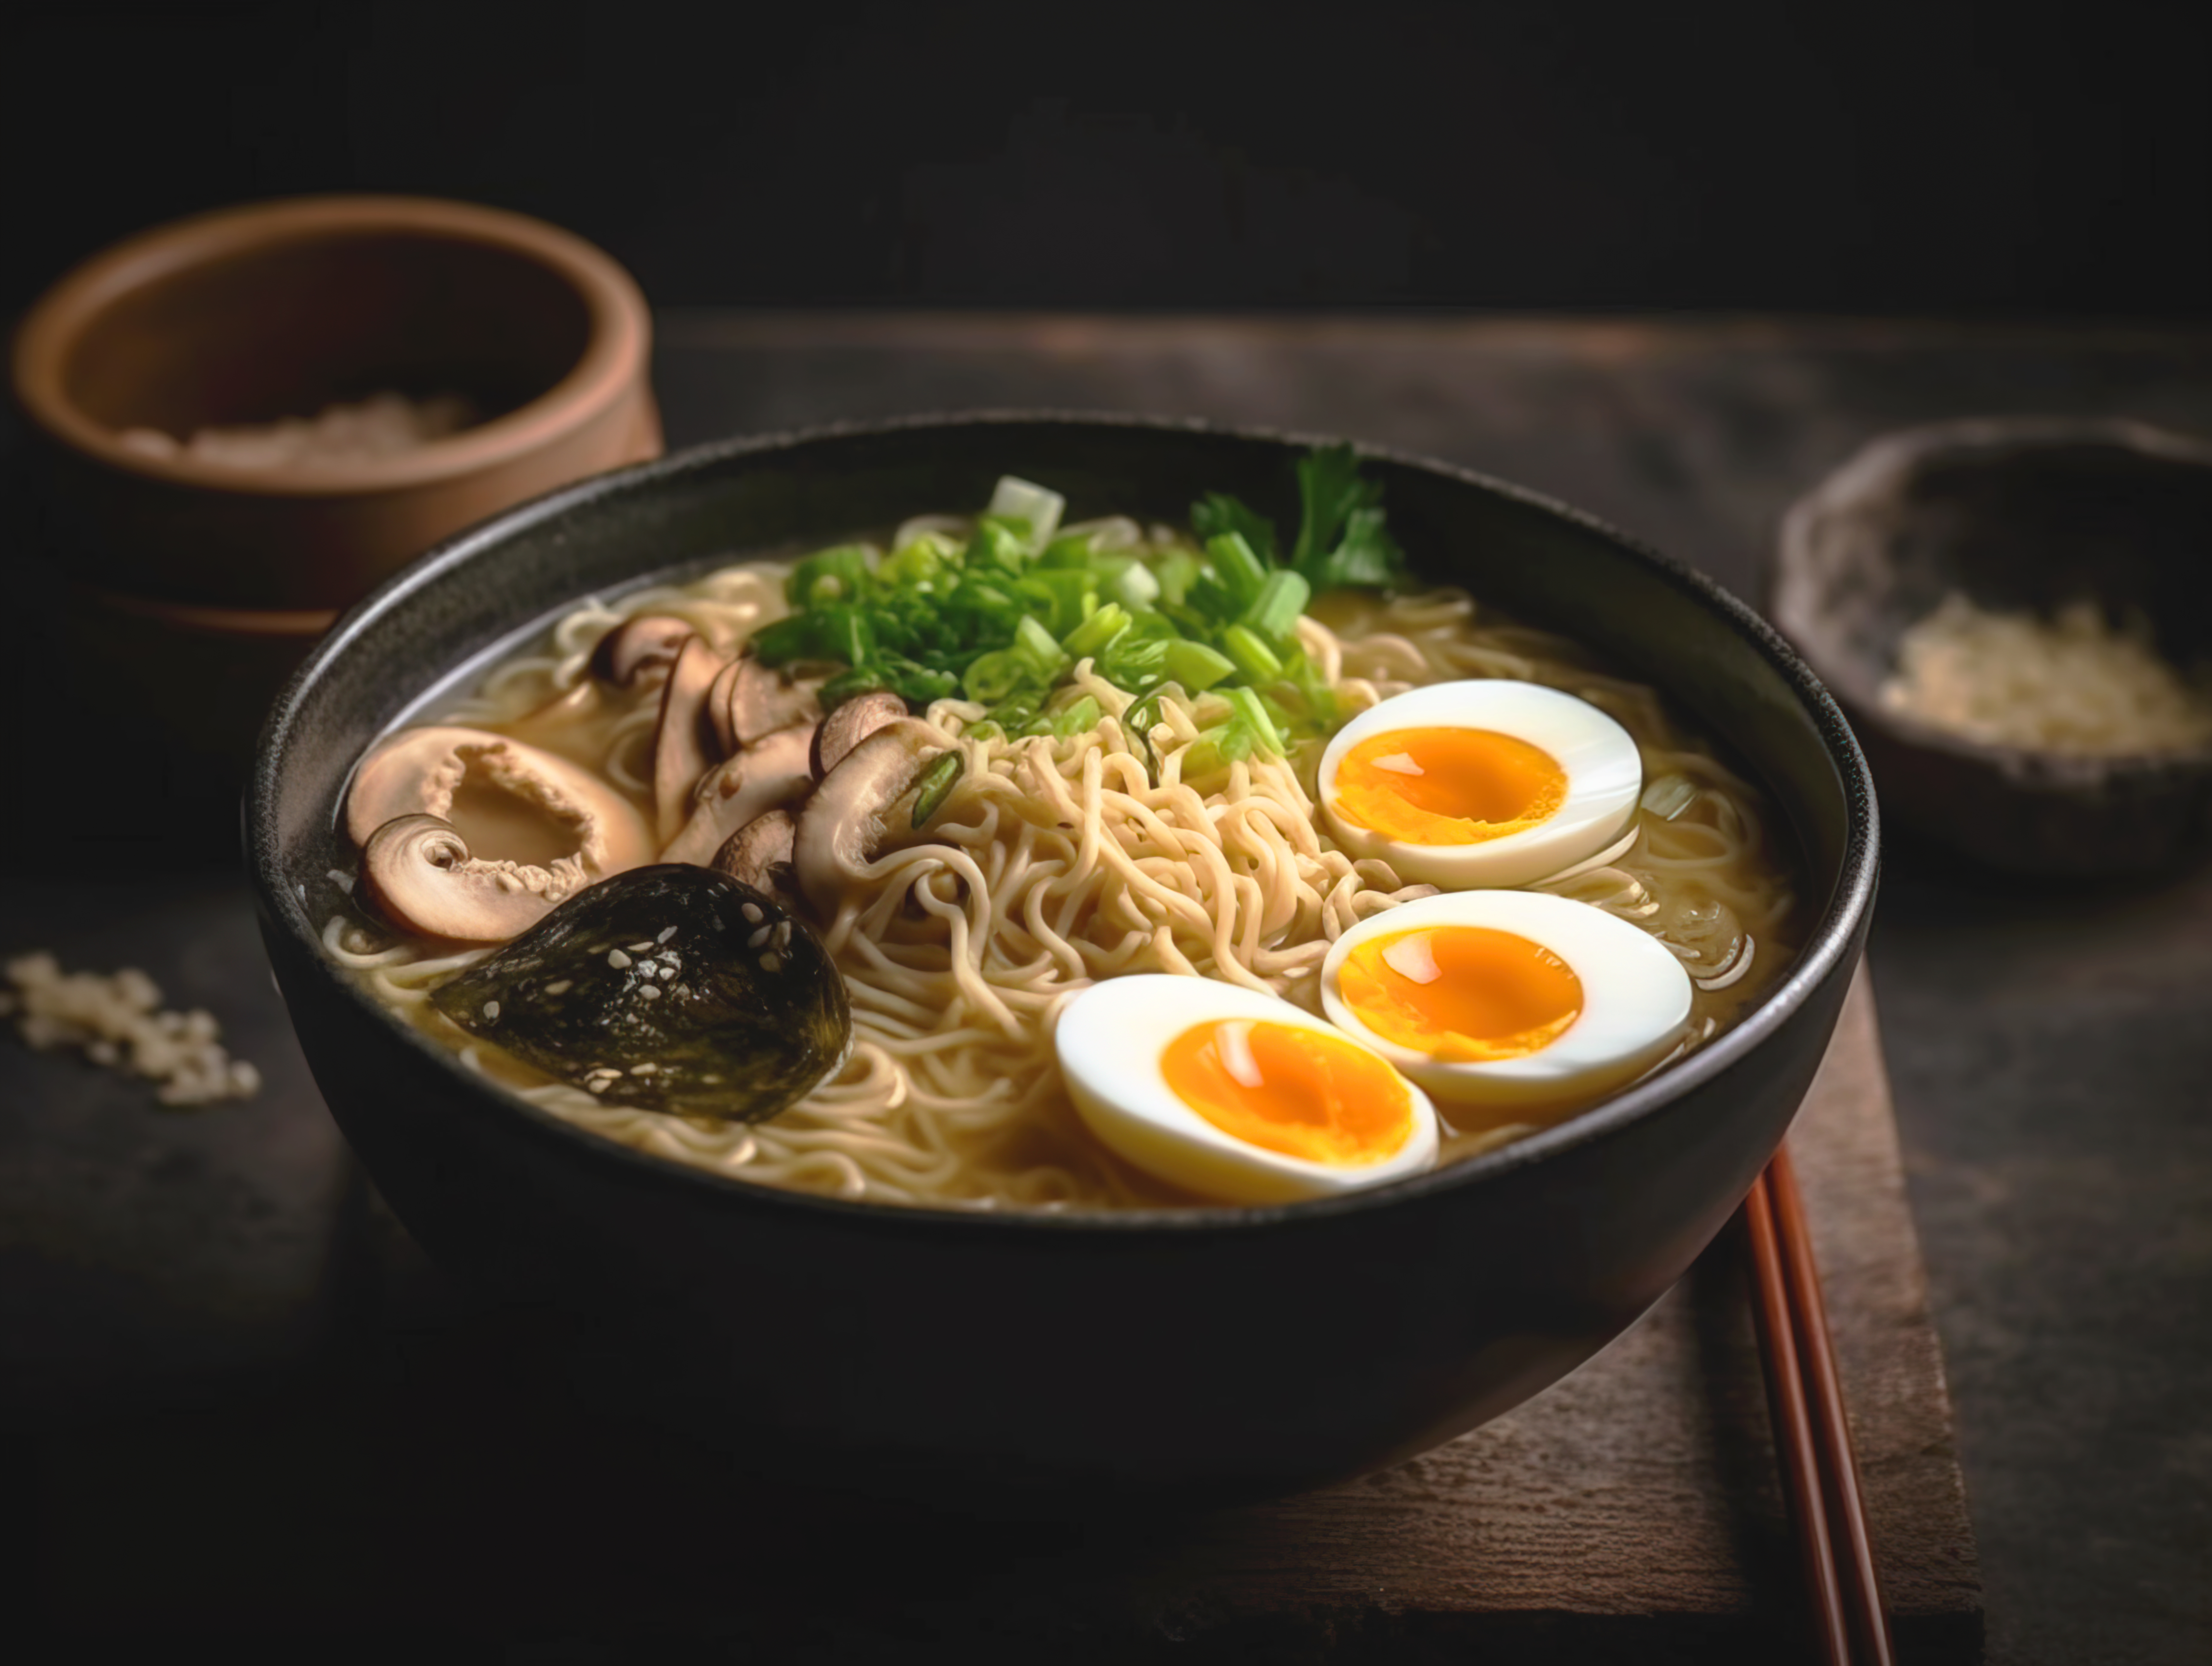 ramen-soup-with-noodles-leek-shiitake-mushroom-nori-soft-egg-chashu-pork-dark-background